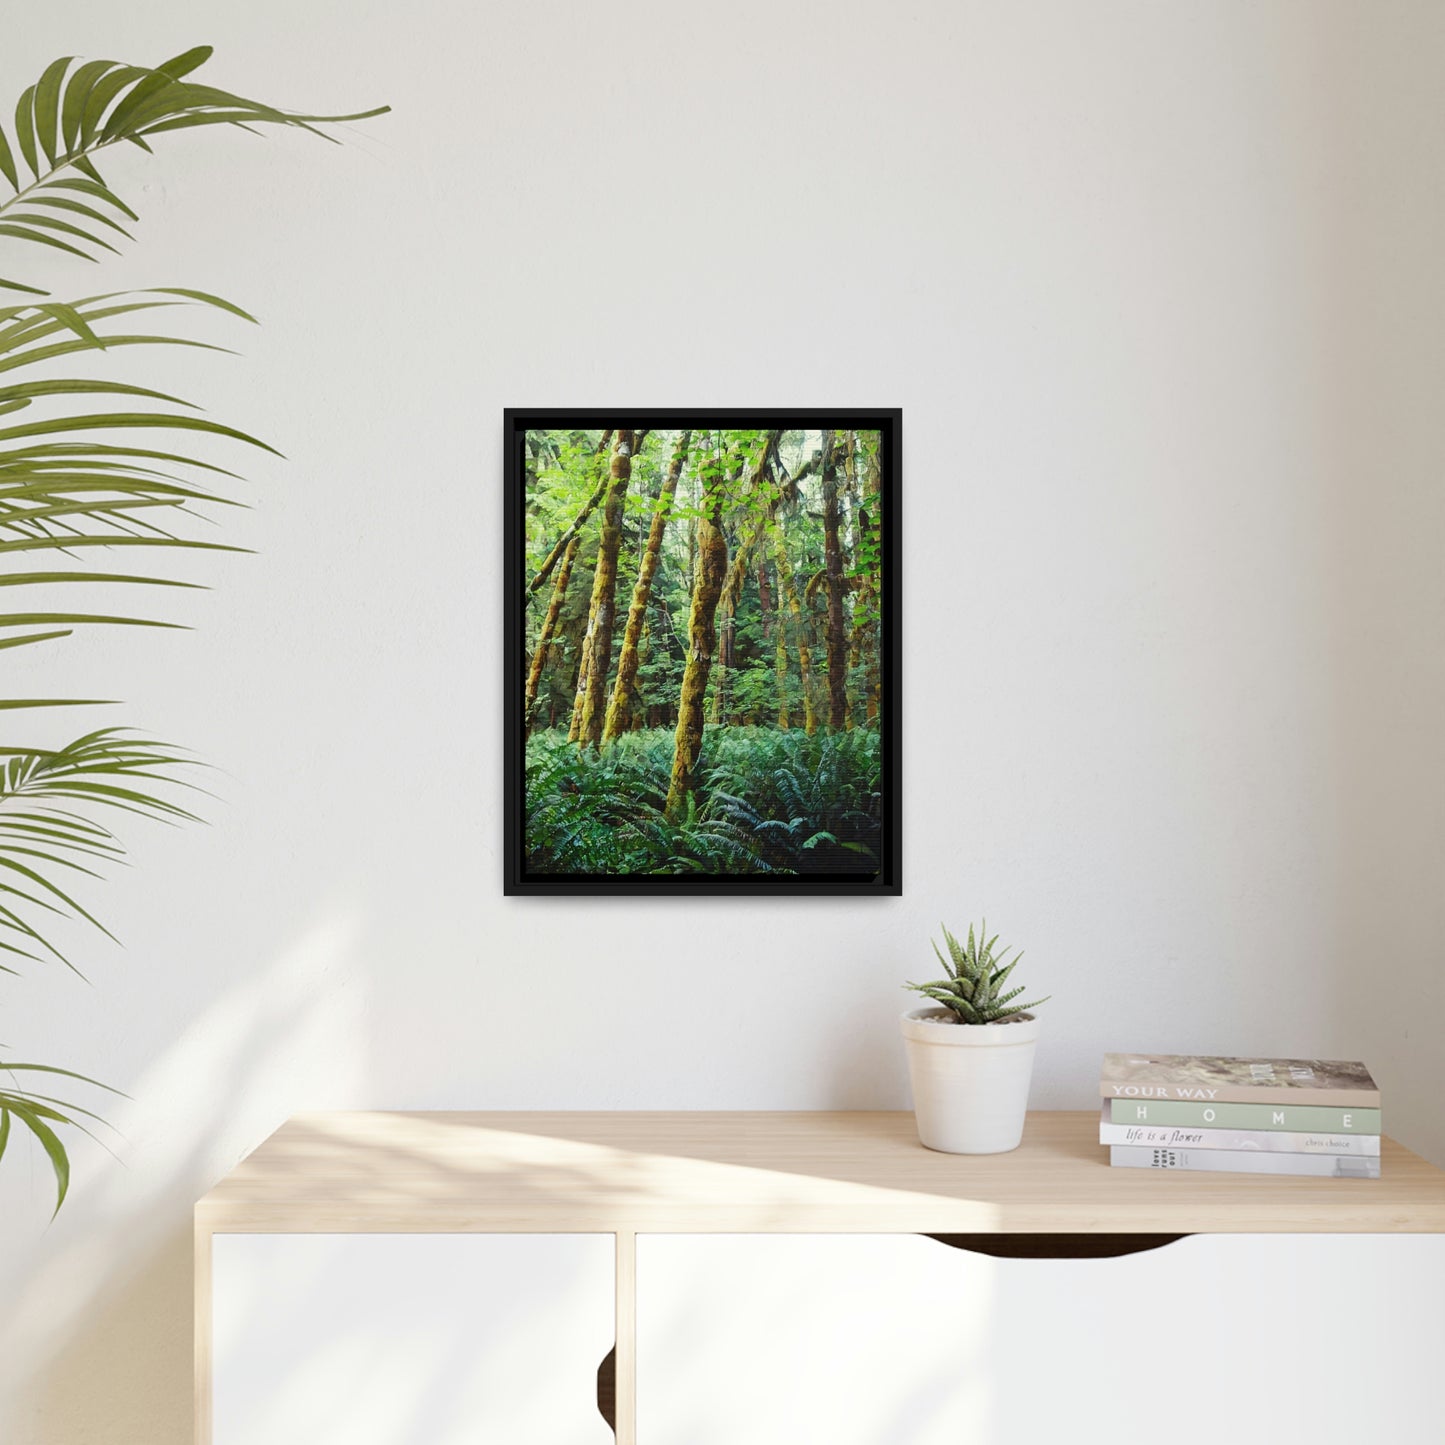 PNW Rainforest Wall Decor on a Black-Framed Canvas